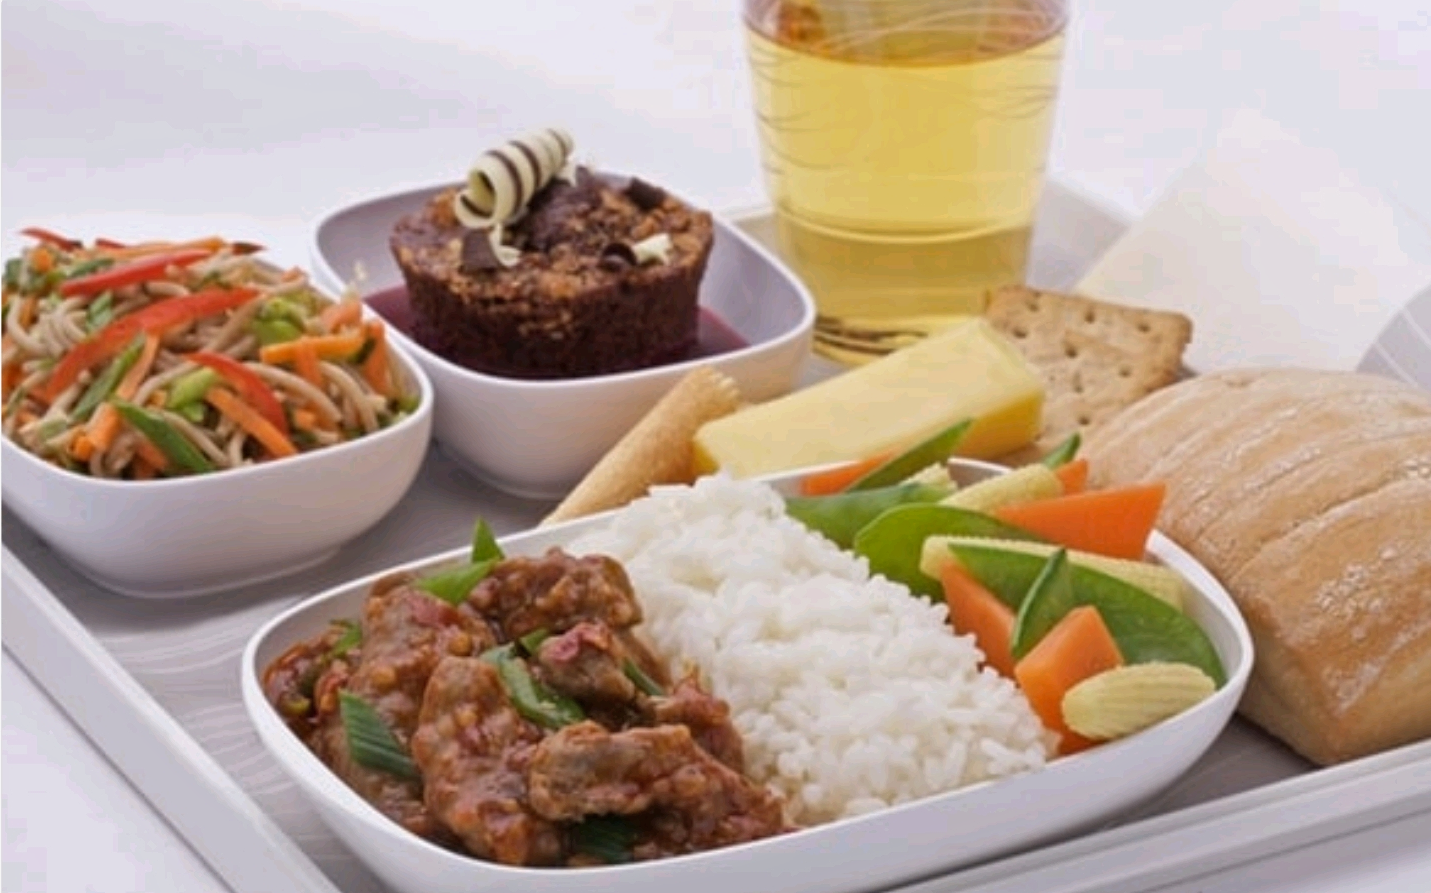 Emirates long haul economy class meal